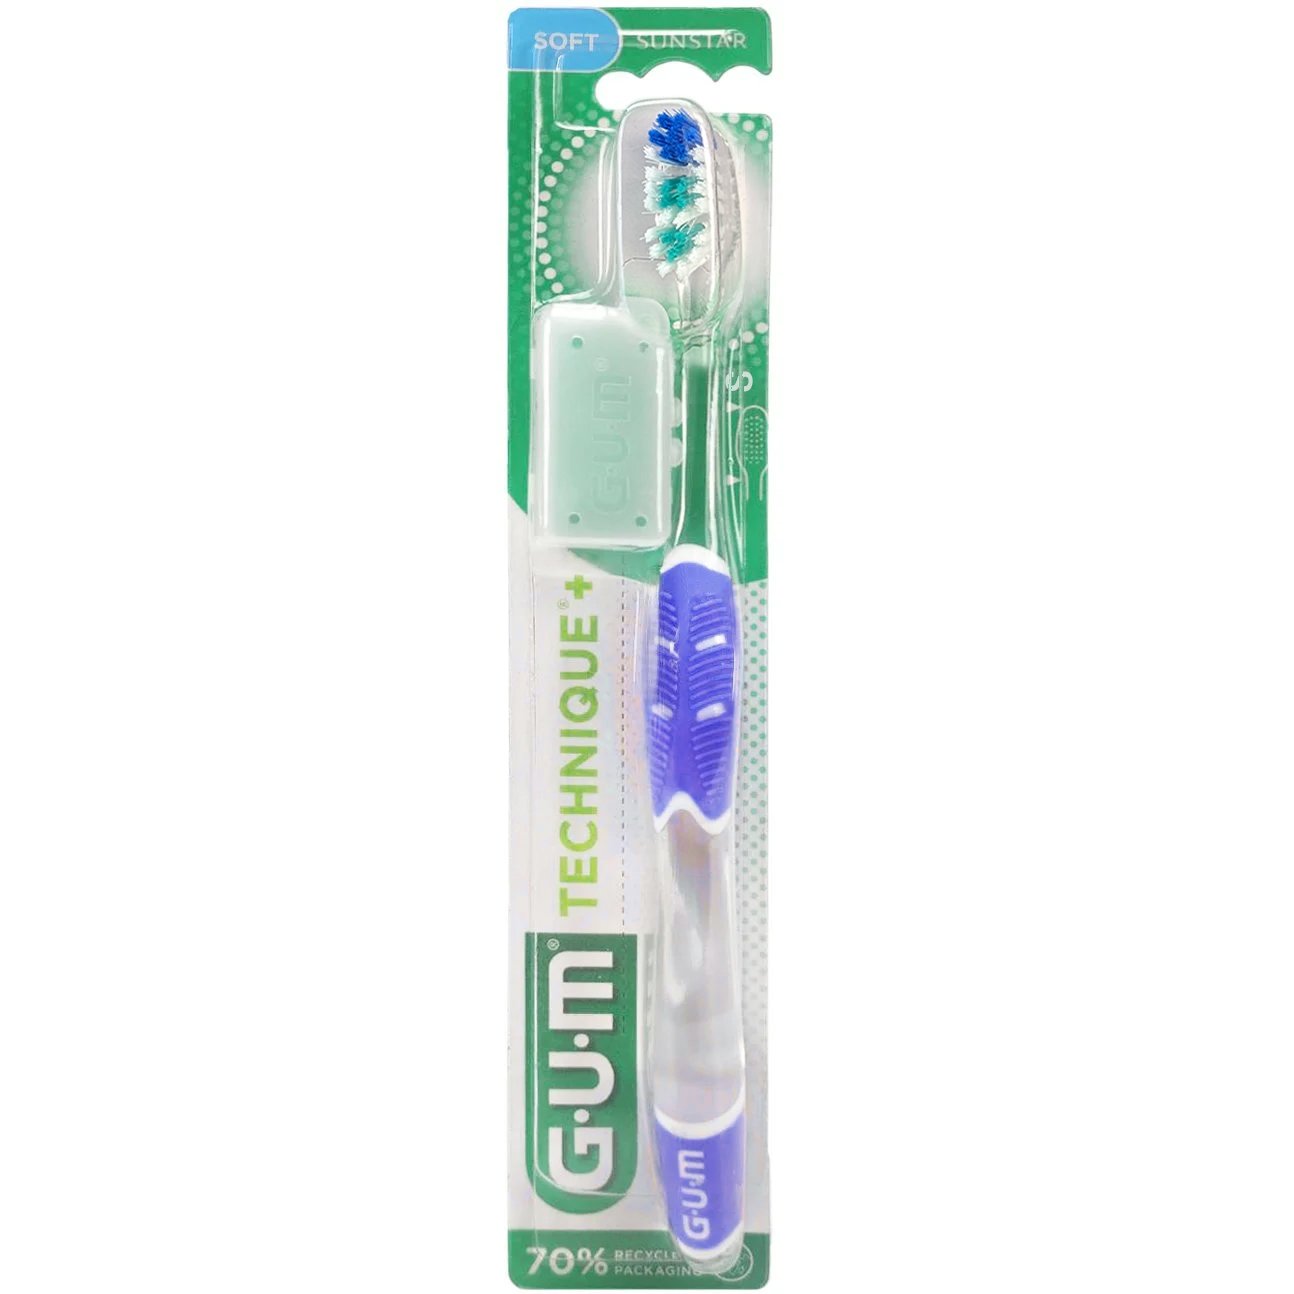 Gum Technique+ Soft Toothbrush Small Χειροκίνητη Οδοντόβουρτσα με Μαλακές Ίνες 1 Τεμάχιο, Κωδ 491 – Μπλε